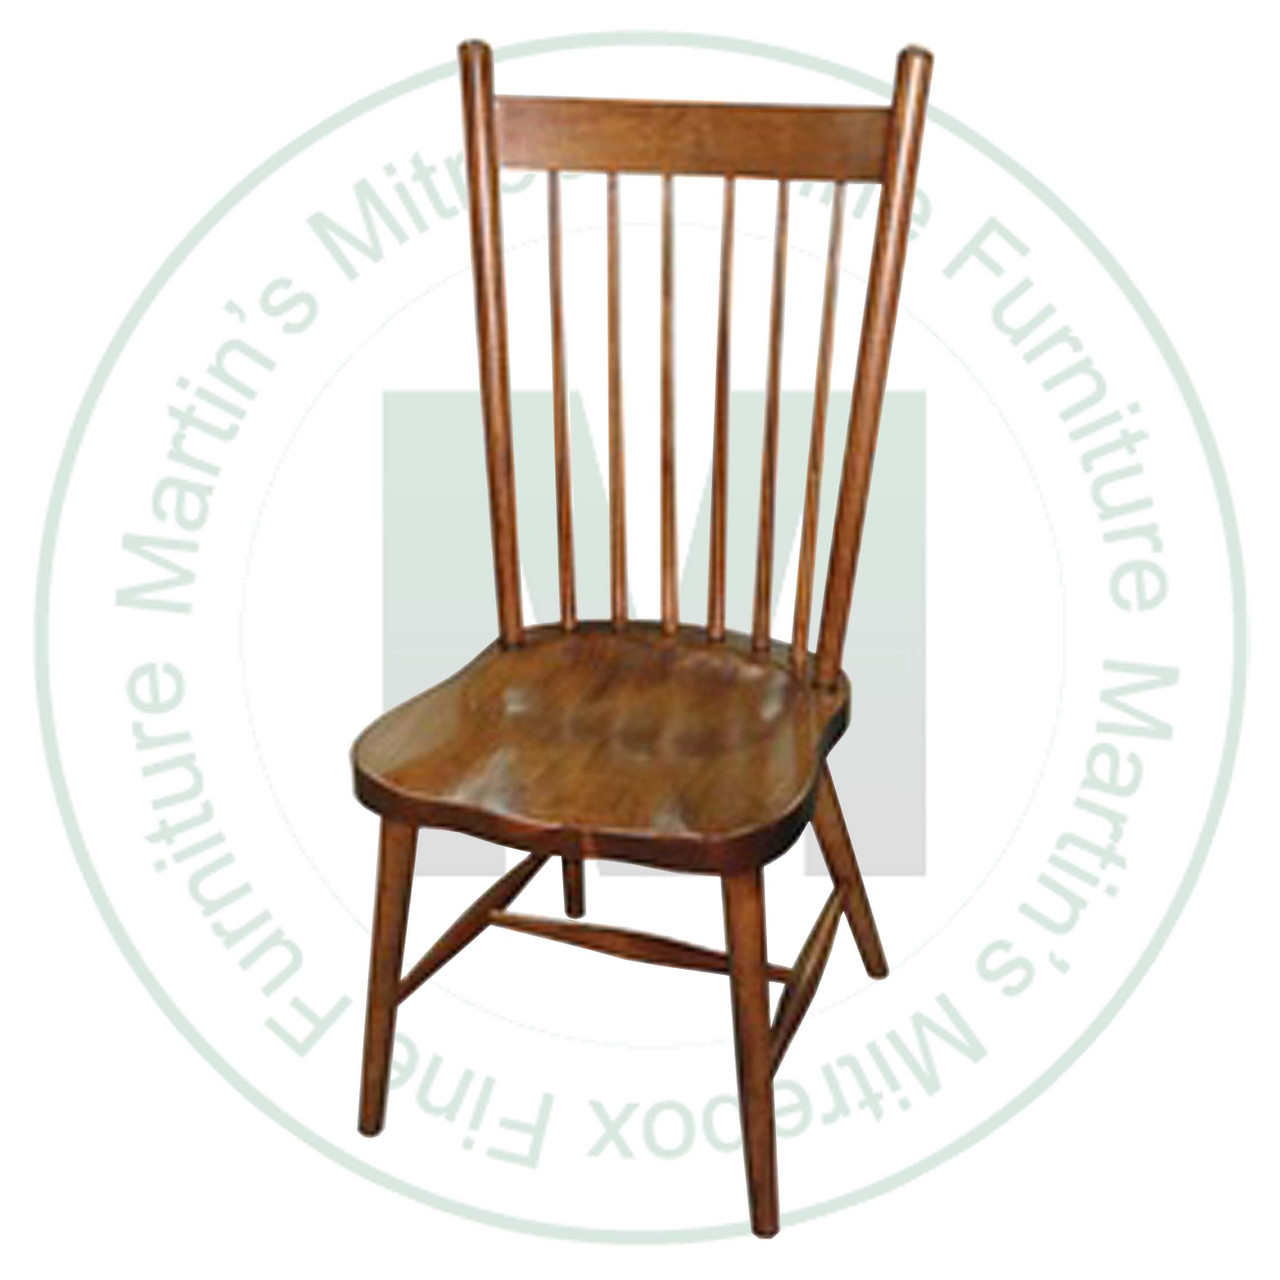 Oak Rustic Farm House Side Chair Has Wood Seat